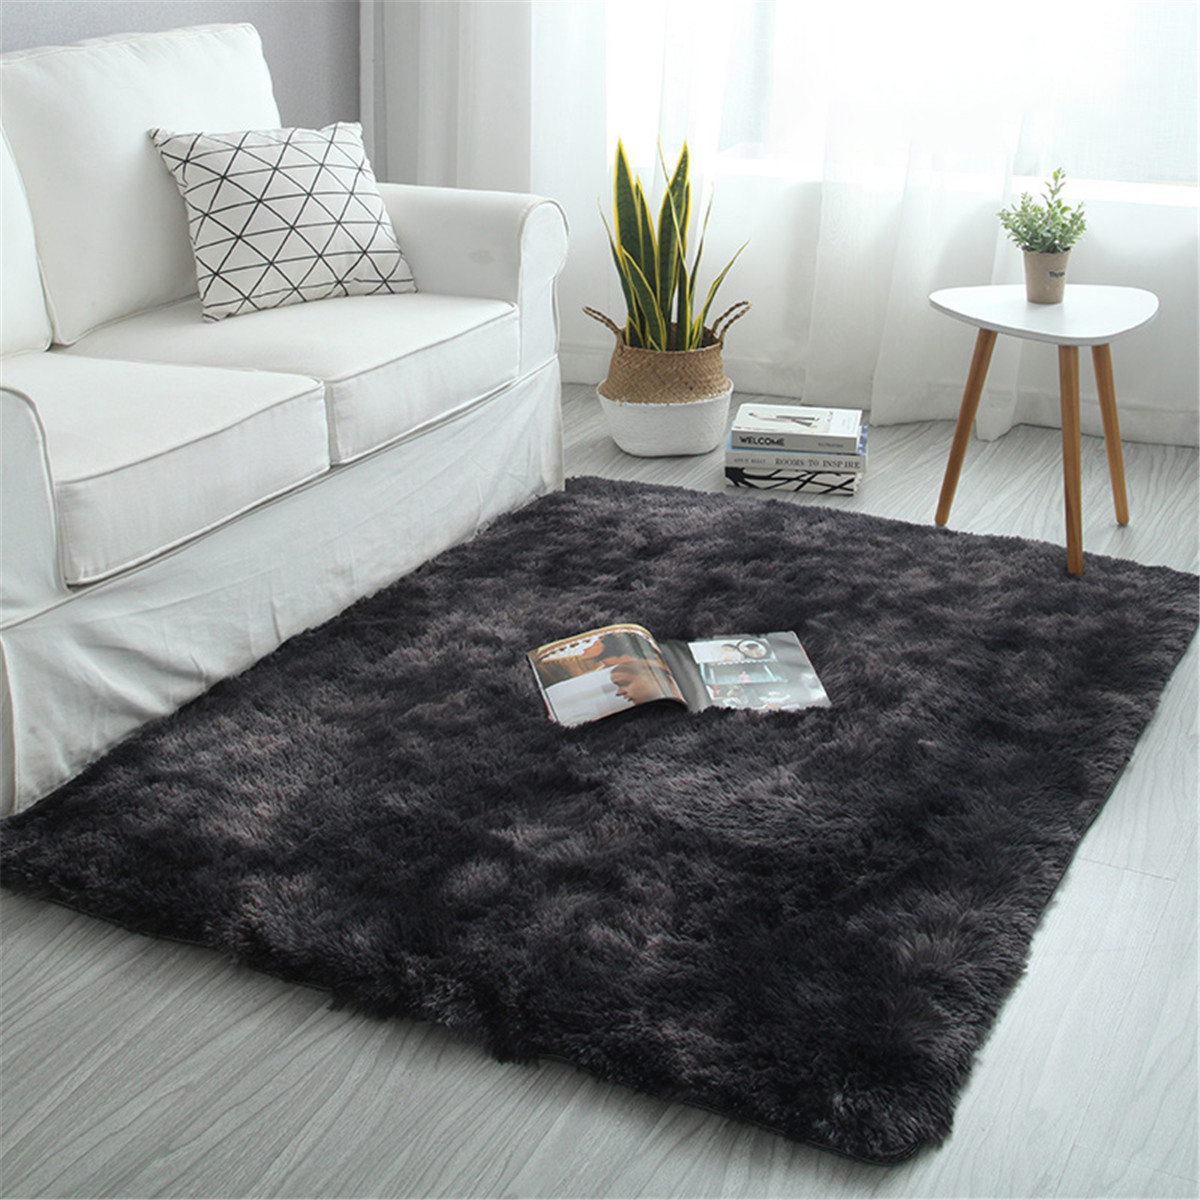 150X240CM-Tie-dyed-Gradient-Carpet-Long-Haired-Anti-slip-Carpet-For-Bedroom-Living-Room-Study-Room-1919744-13